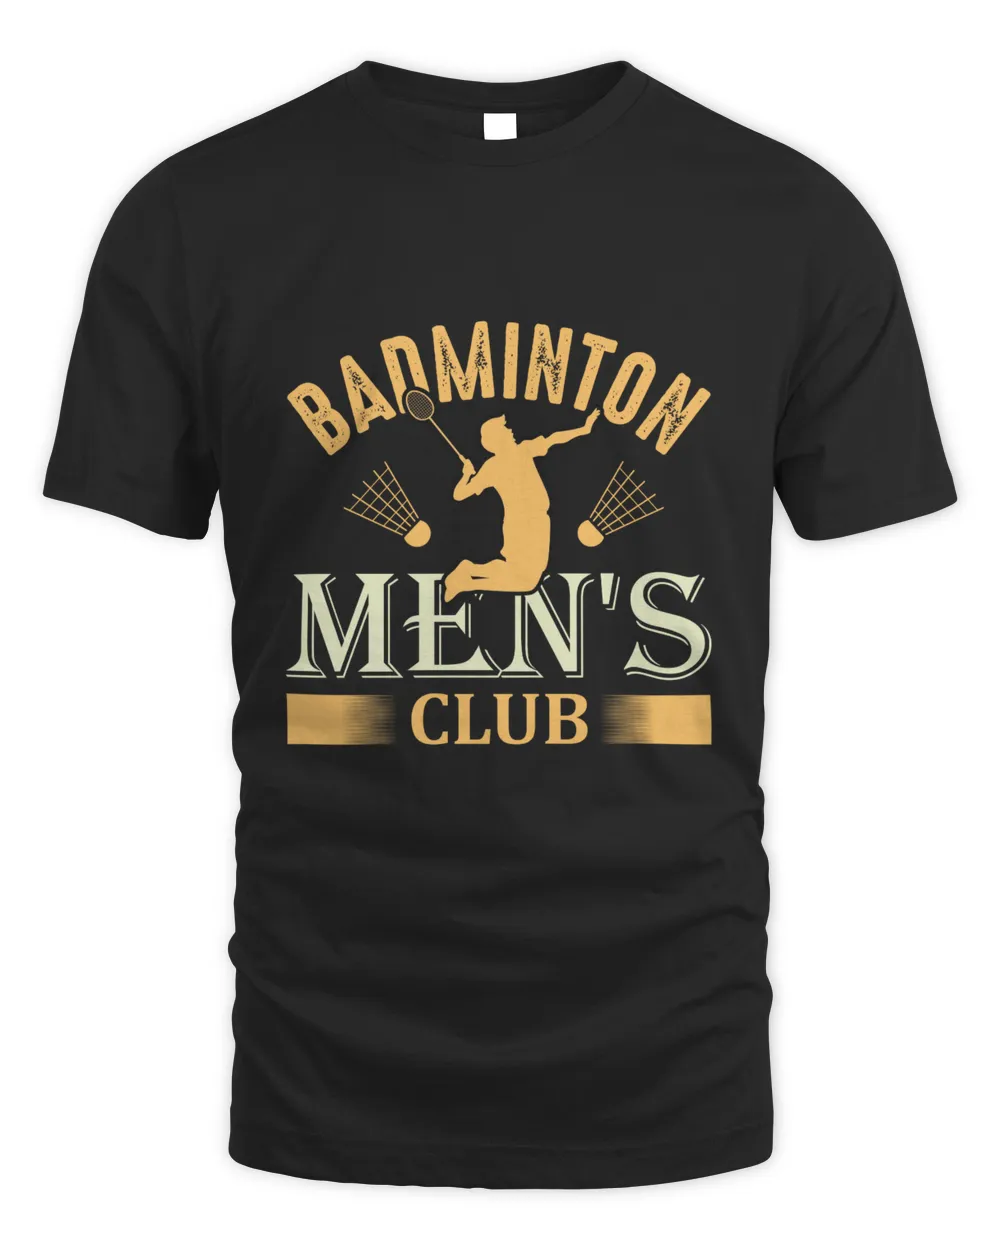 Badminton Men's Shirt, Badminton Shirt,Badminton T-shirt,Funny Badminton Shirt, Badminton Gift,Sport Shirt